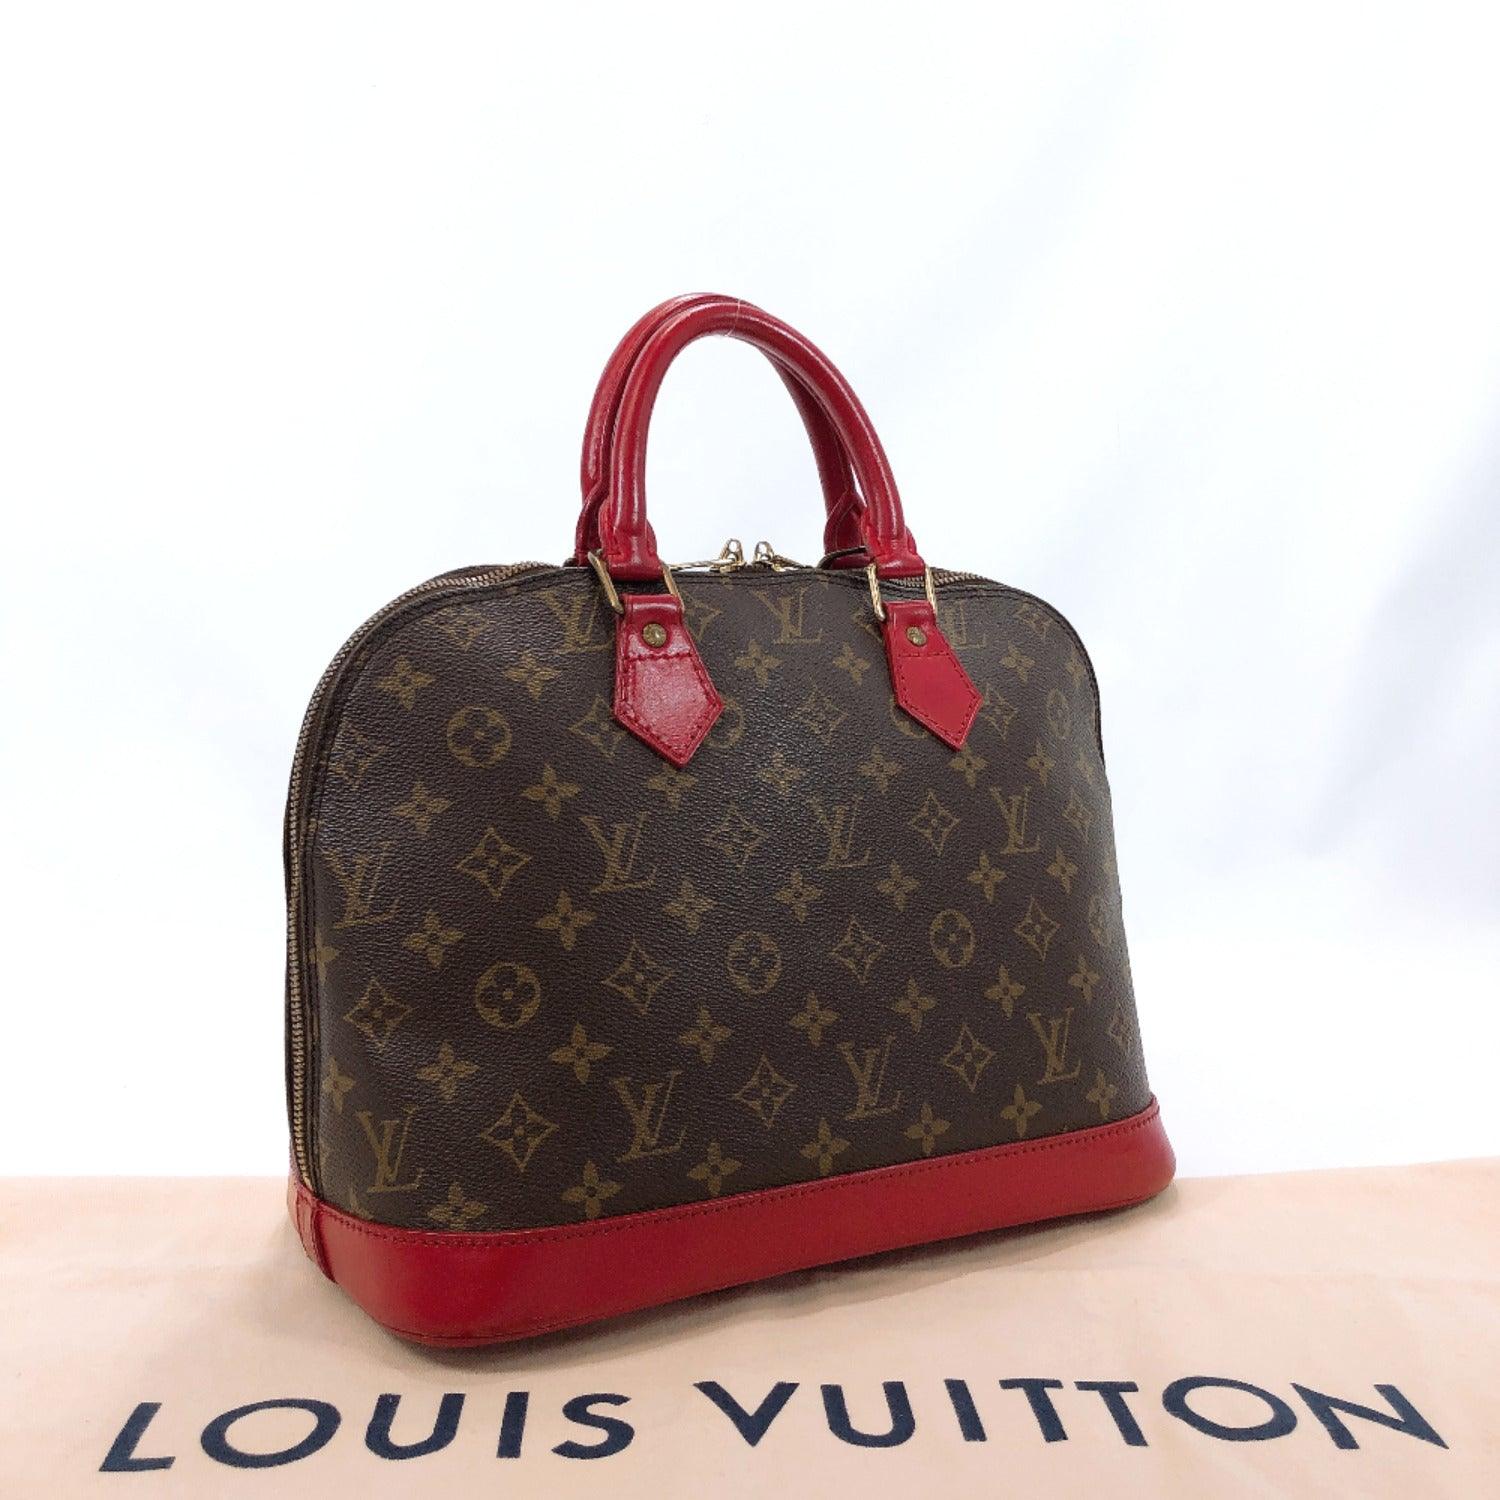 Where to buy the Louis Vuitton Alma